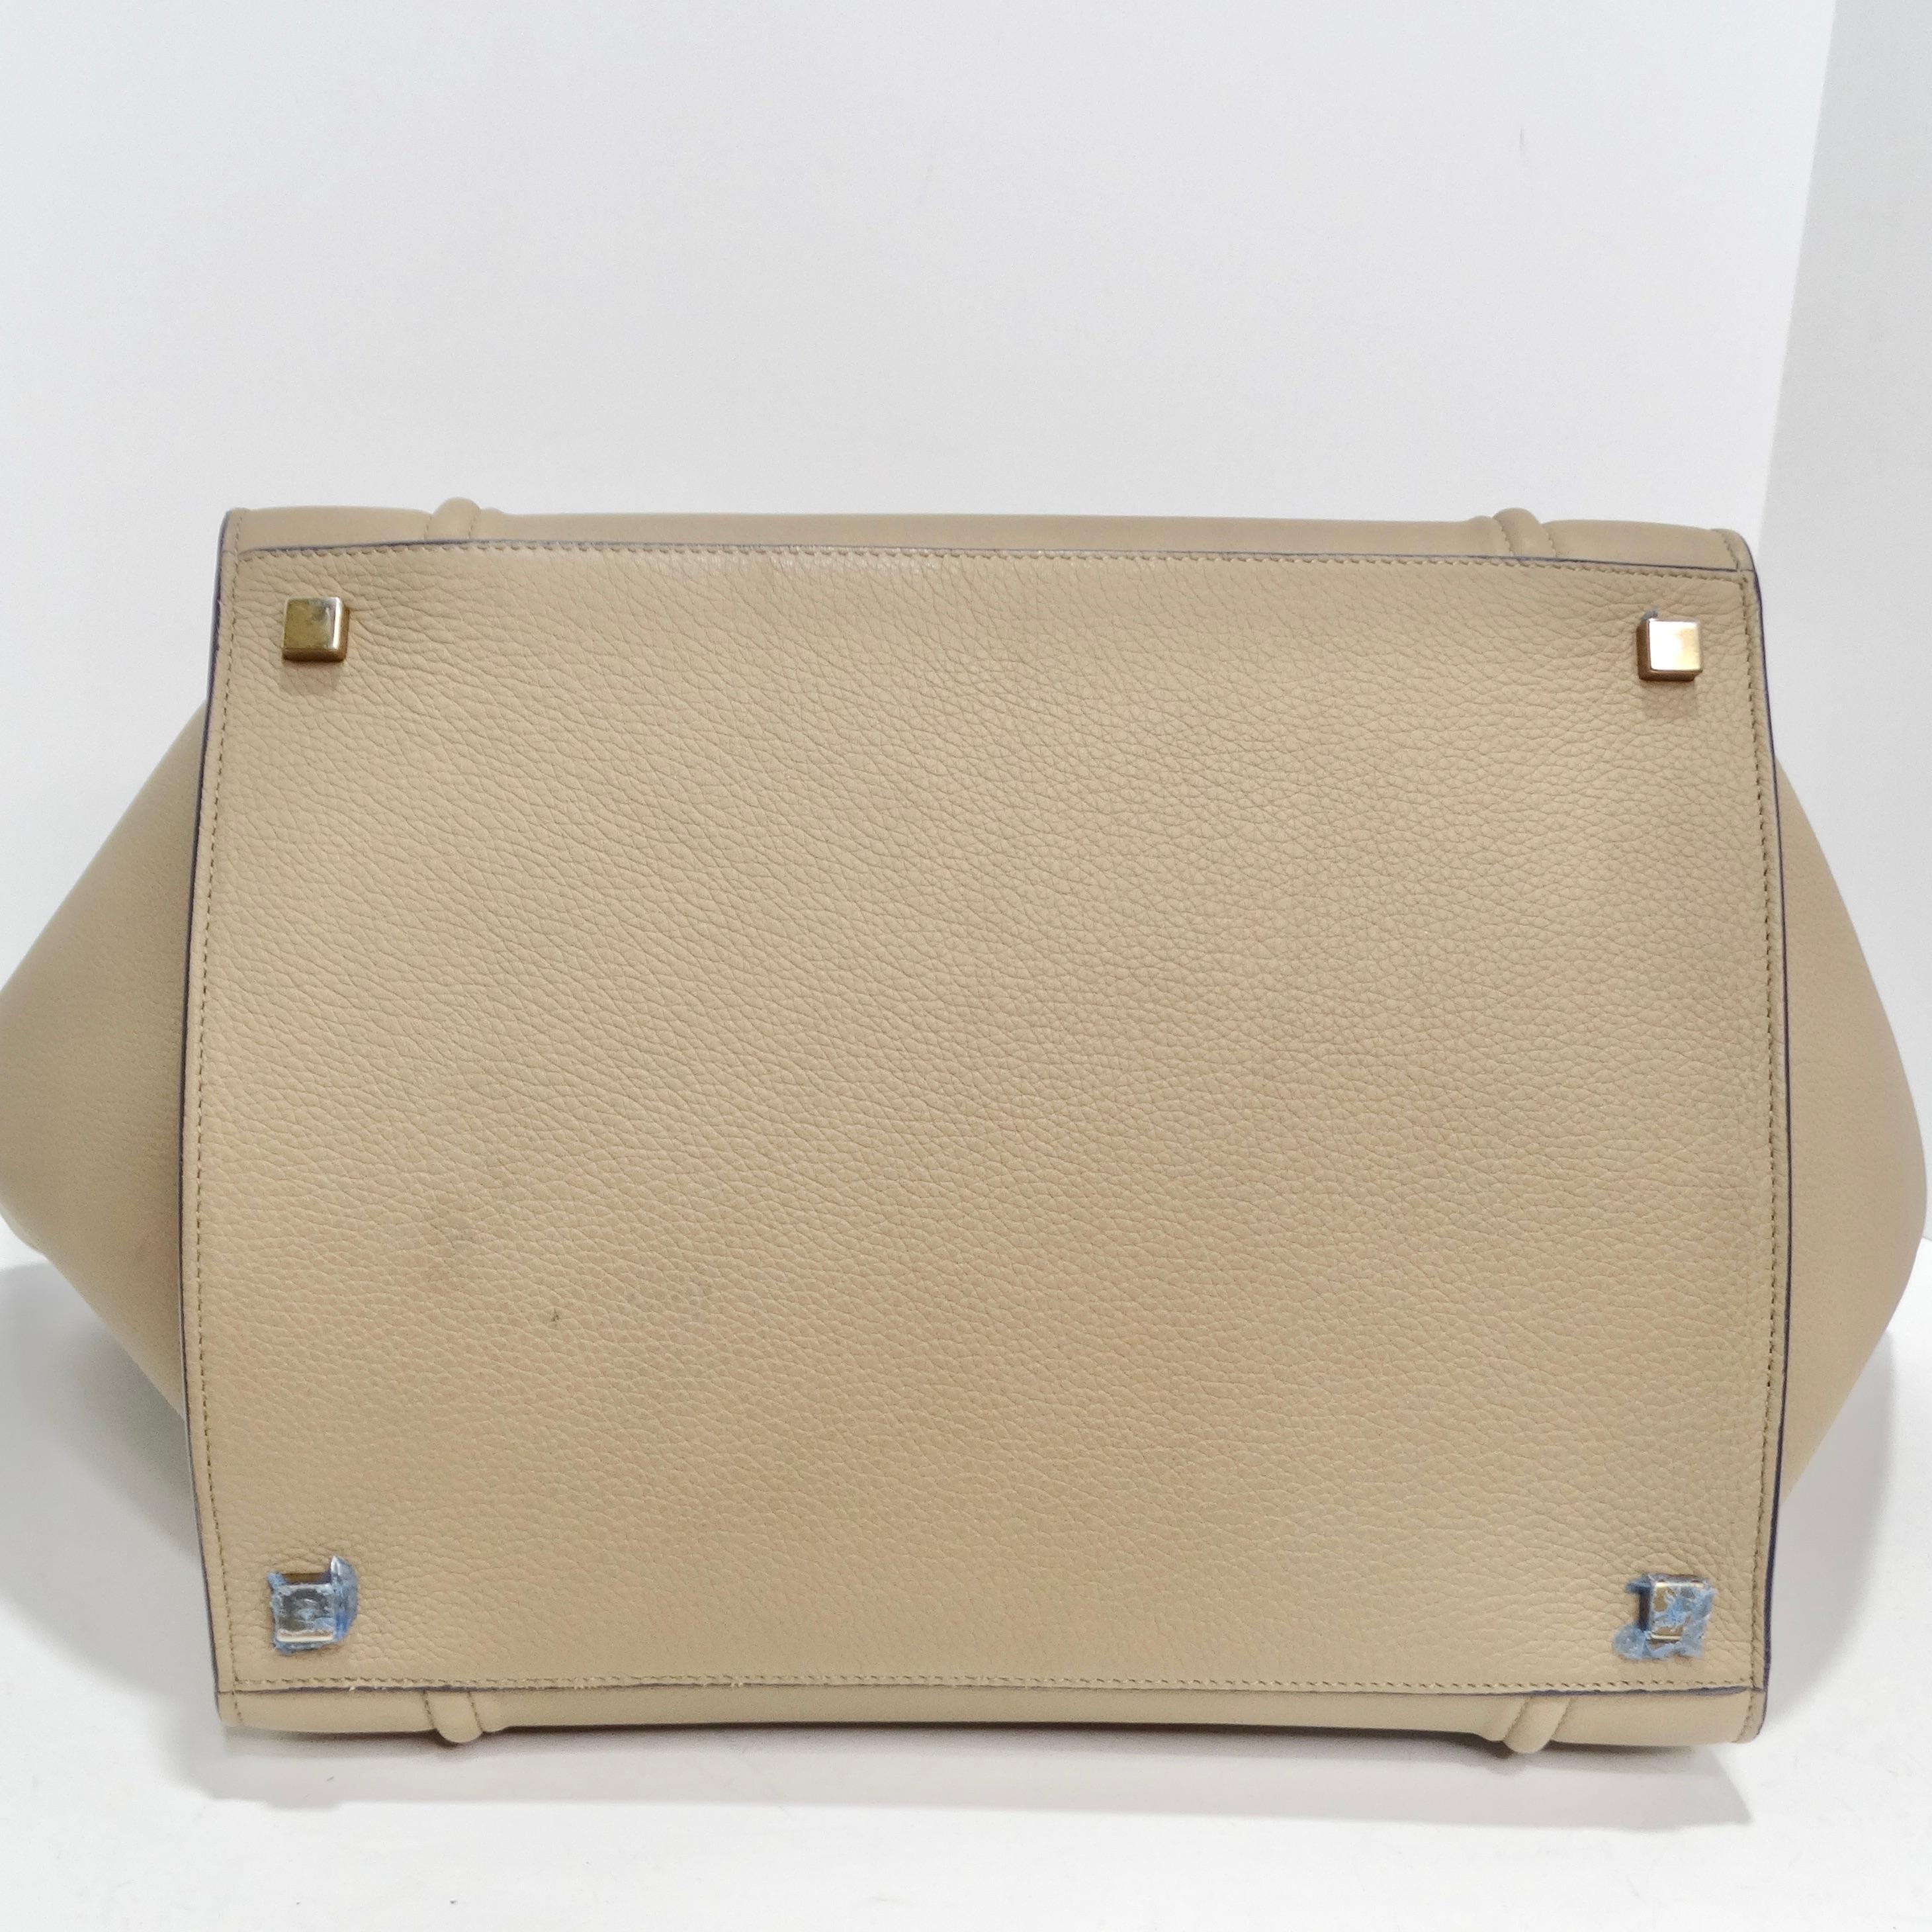 Celine Beige Calfskin Leather Medium Phantom Luggage Tote Bag For Sale 3